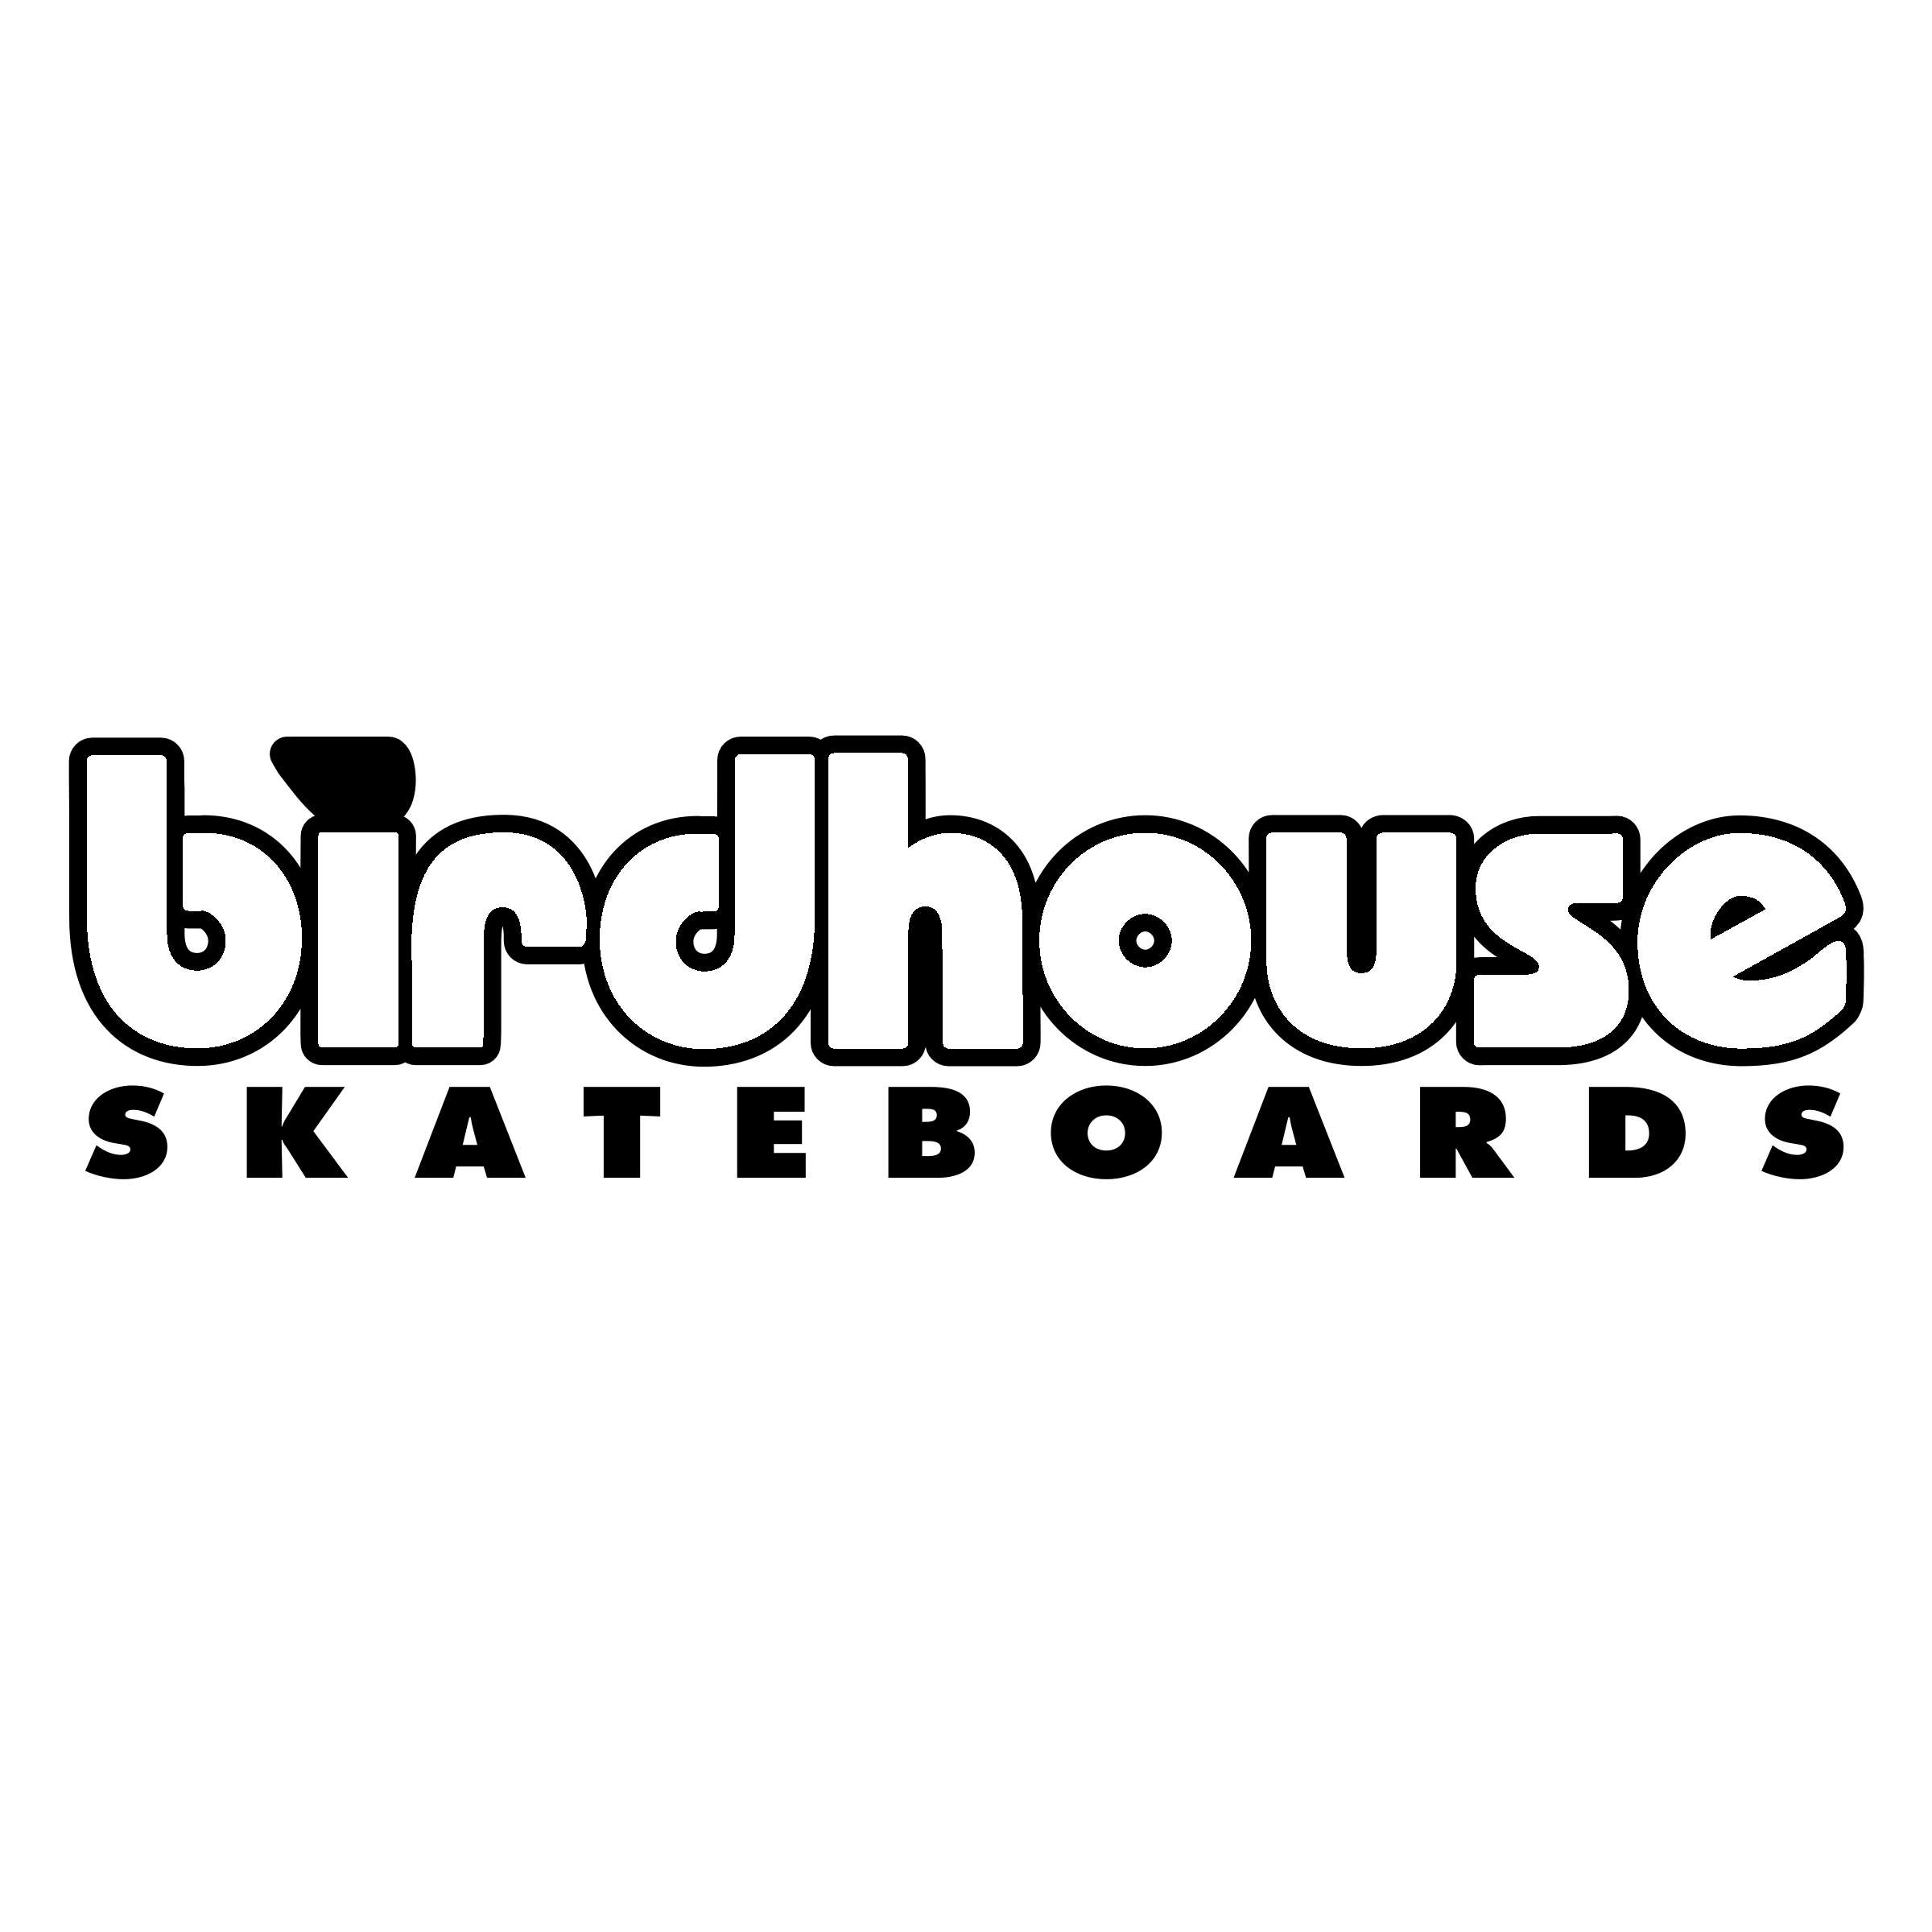 Birdhouse Skateboards Logo - Birdhouse Skateboards Logo PNG Transparent & SVG Vector